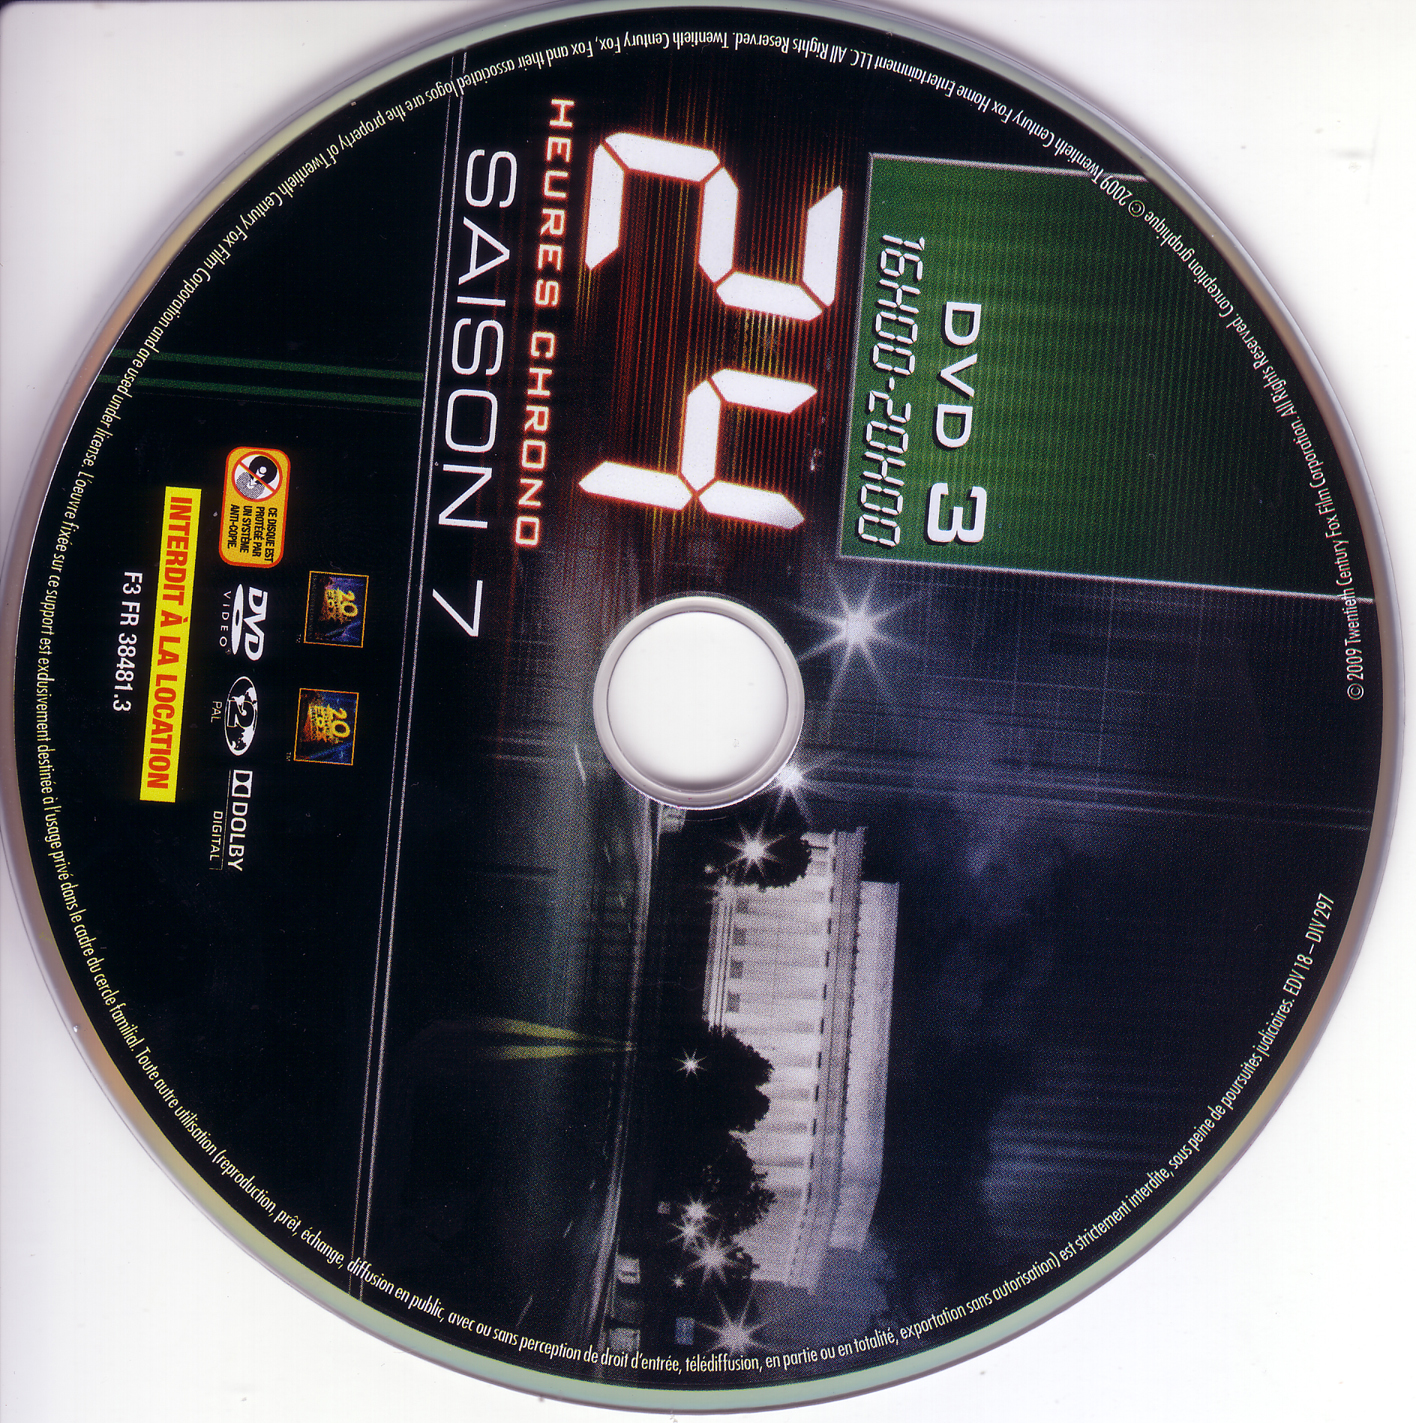 24 heures chrono Saison 7 DVD 3